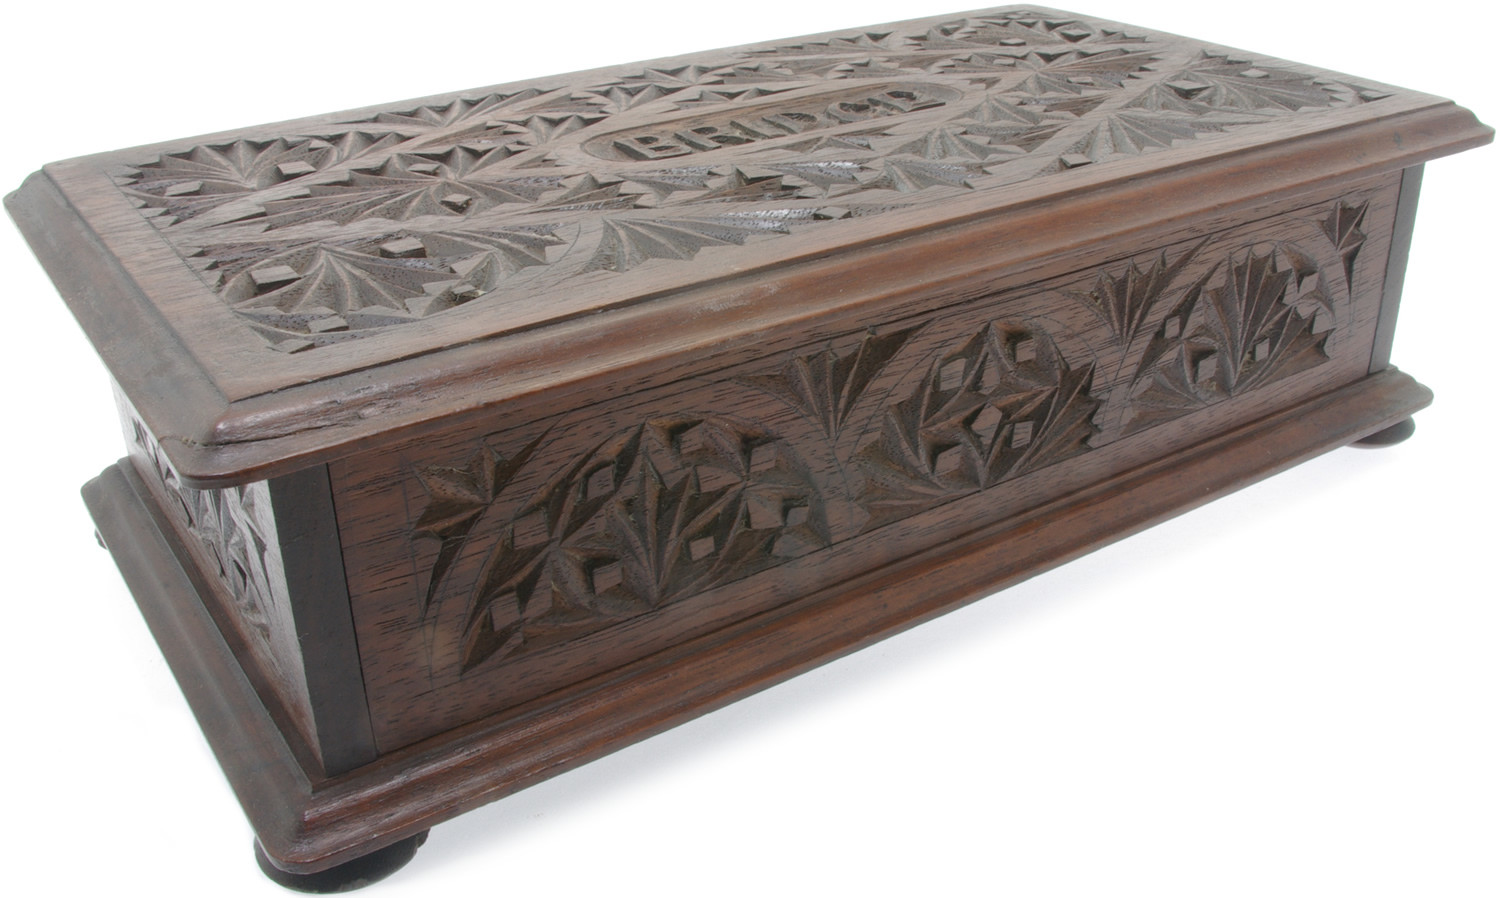 Bridge box, antique carved mahogany